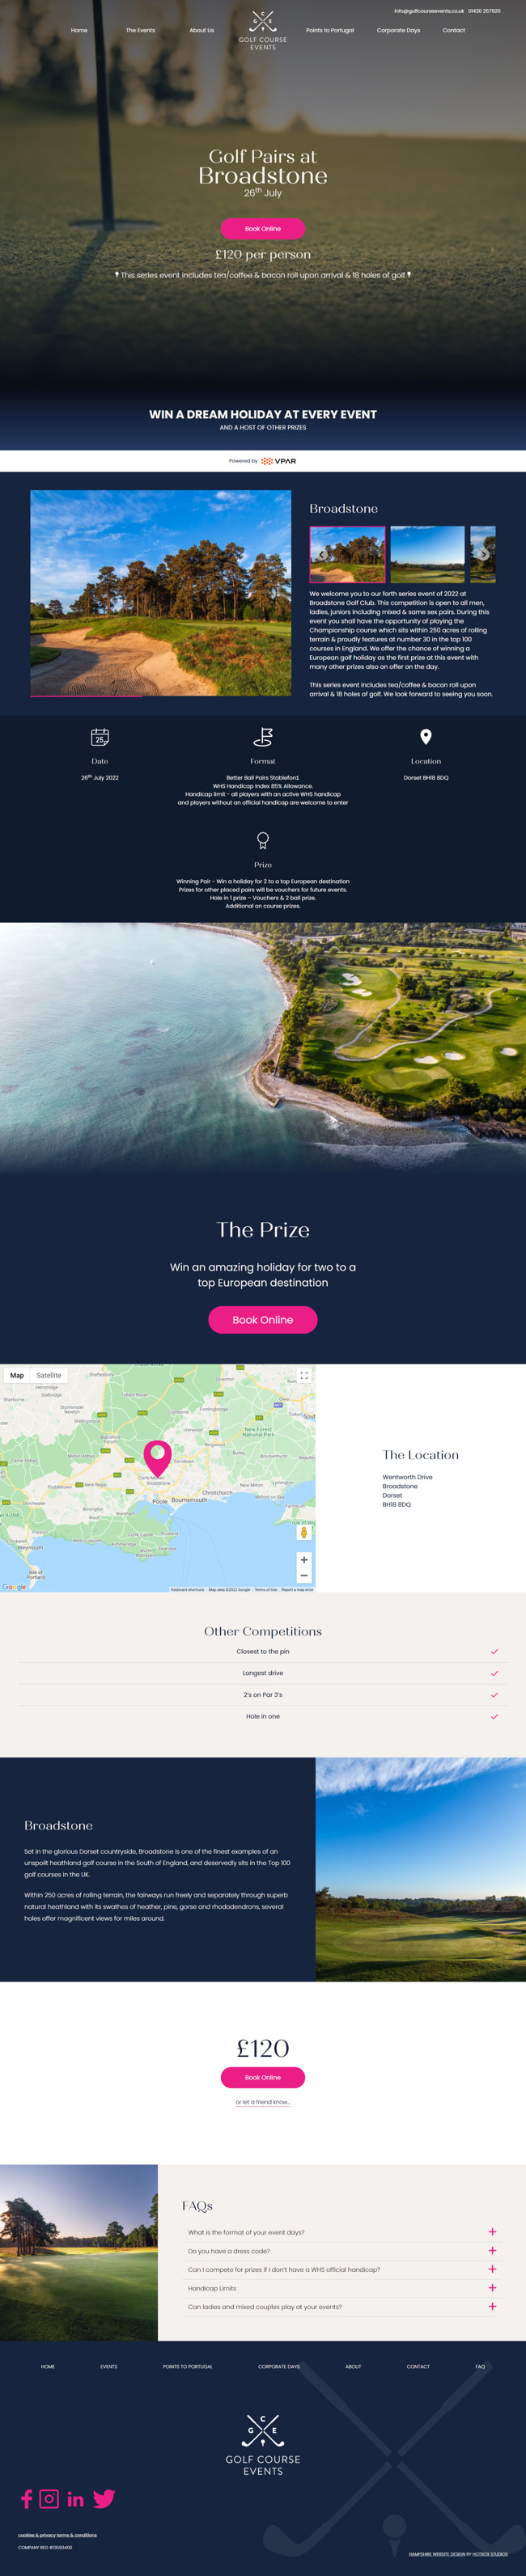 Golf Course Events Website Design And Wordpress Web Development SP006 Broadstone